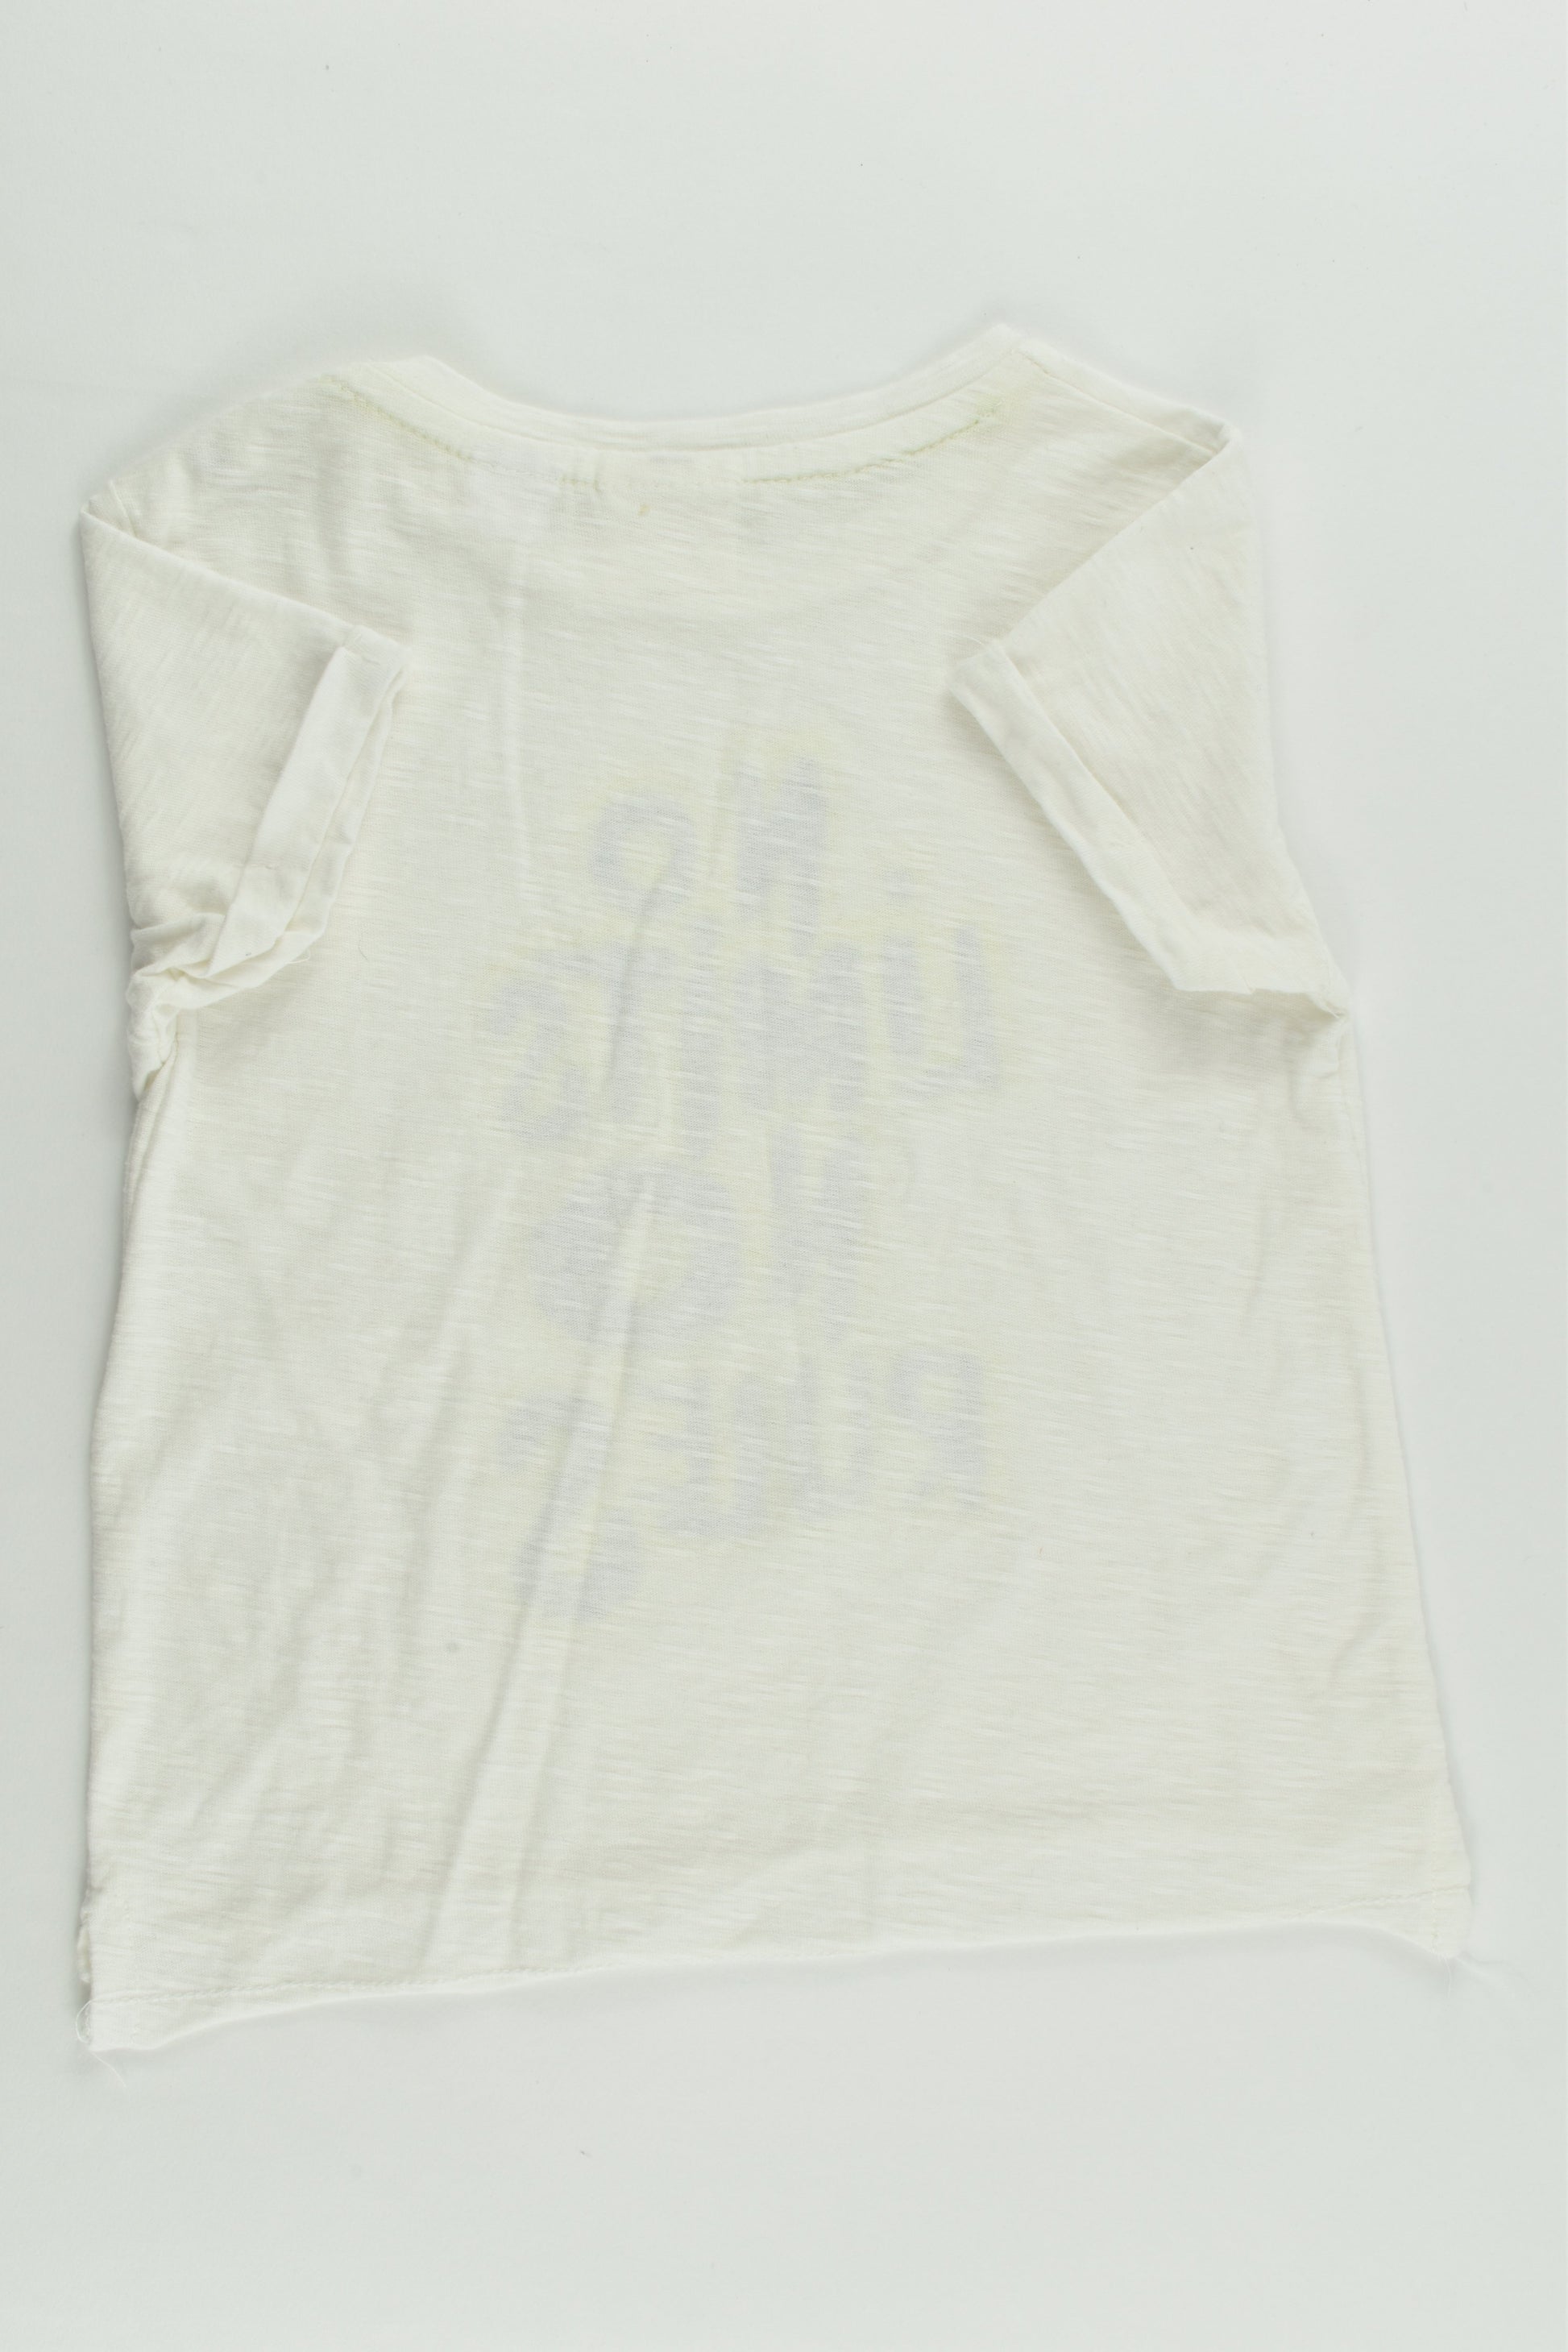 NEW Zara Size 2 (18/24 months, 92 cm) 'No Limits, No Rules' T-shirt